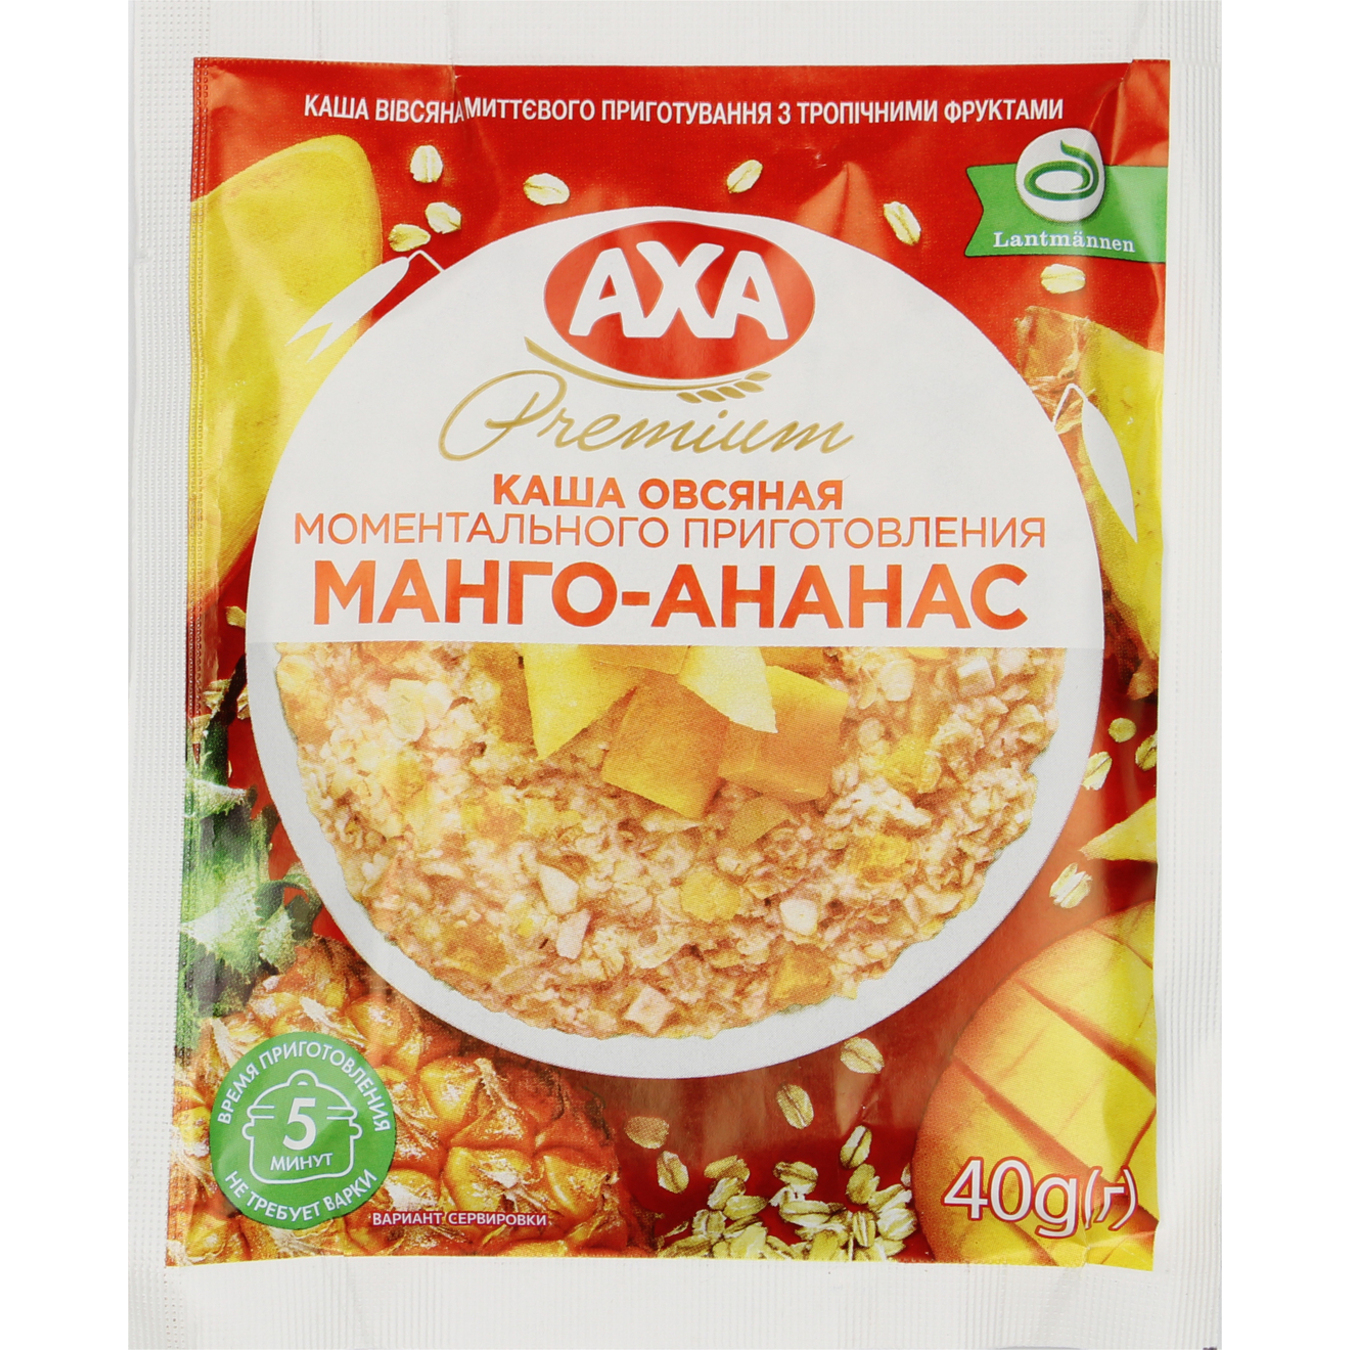 AXA With Tropical Fruits Quick-Cooking Oat Porridge 40g